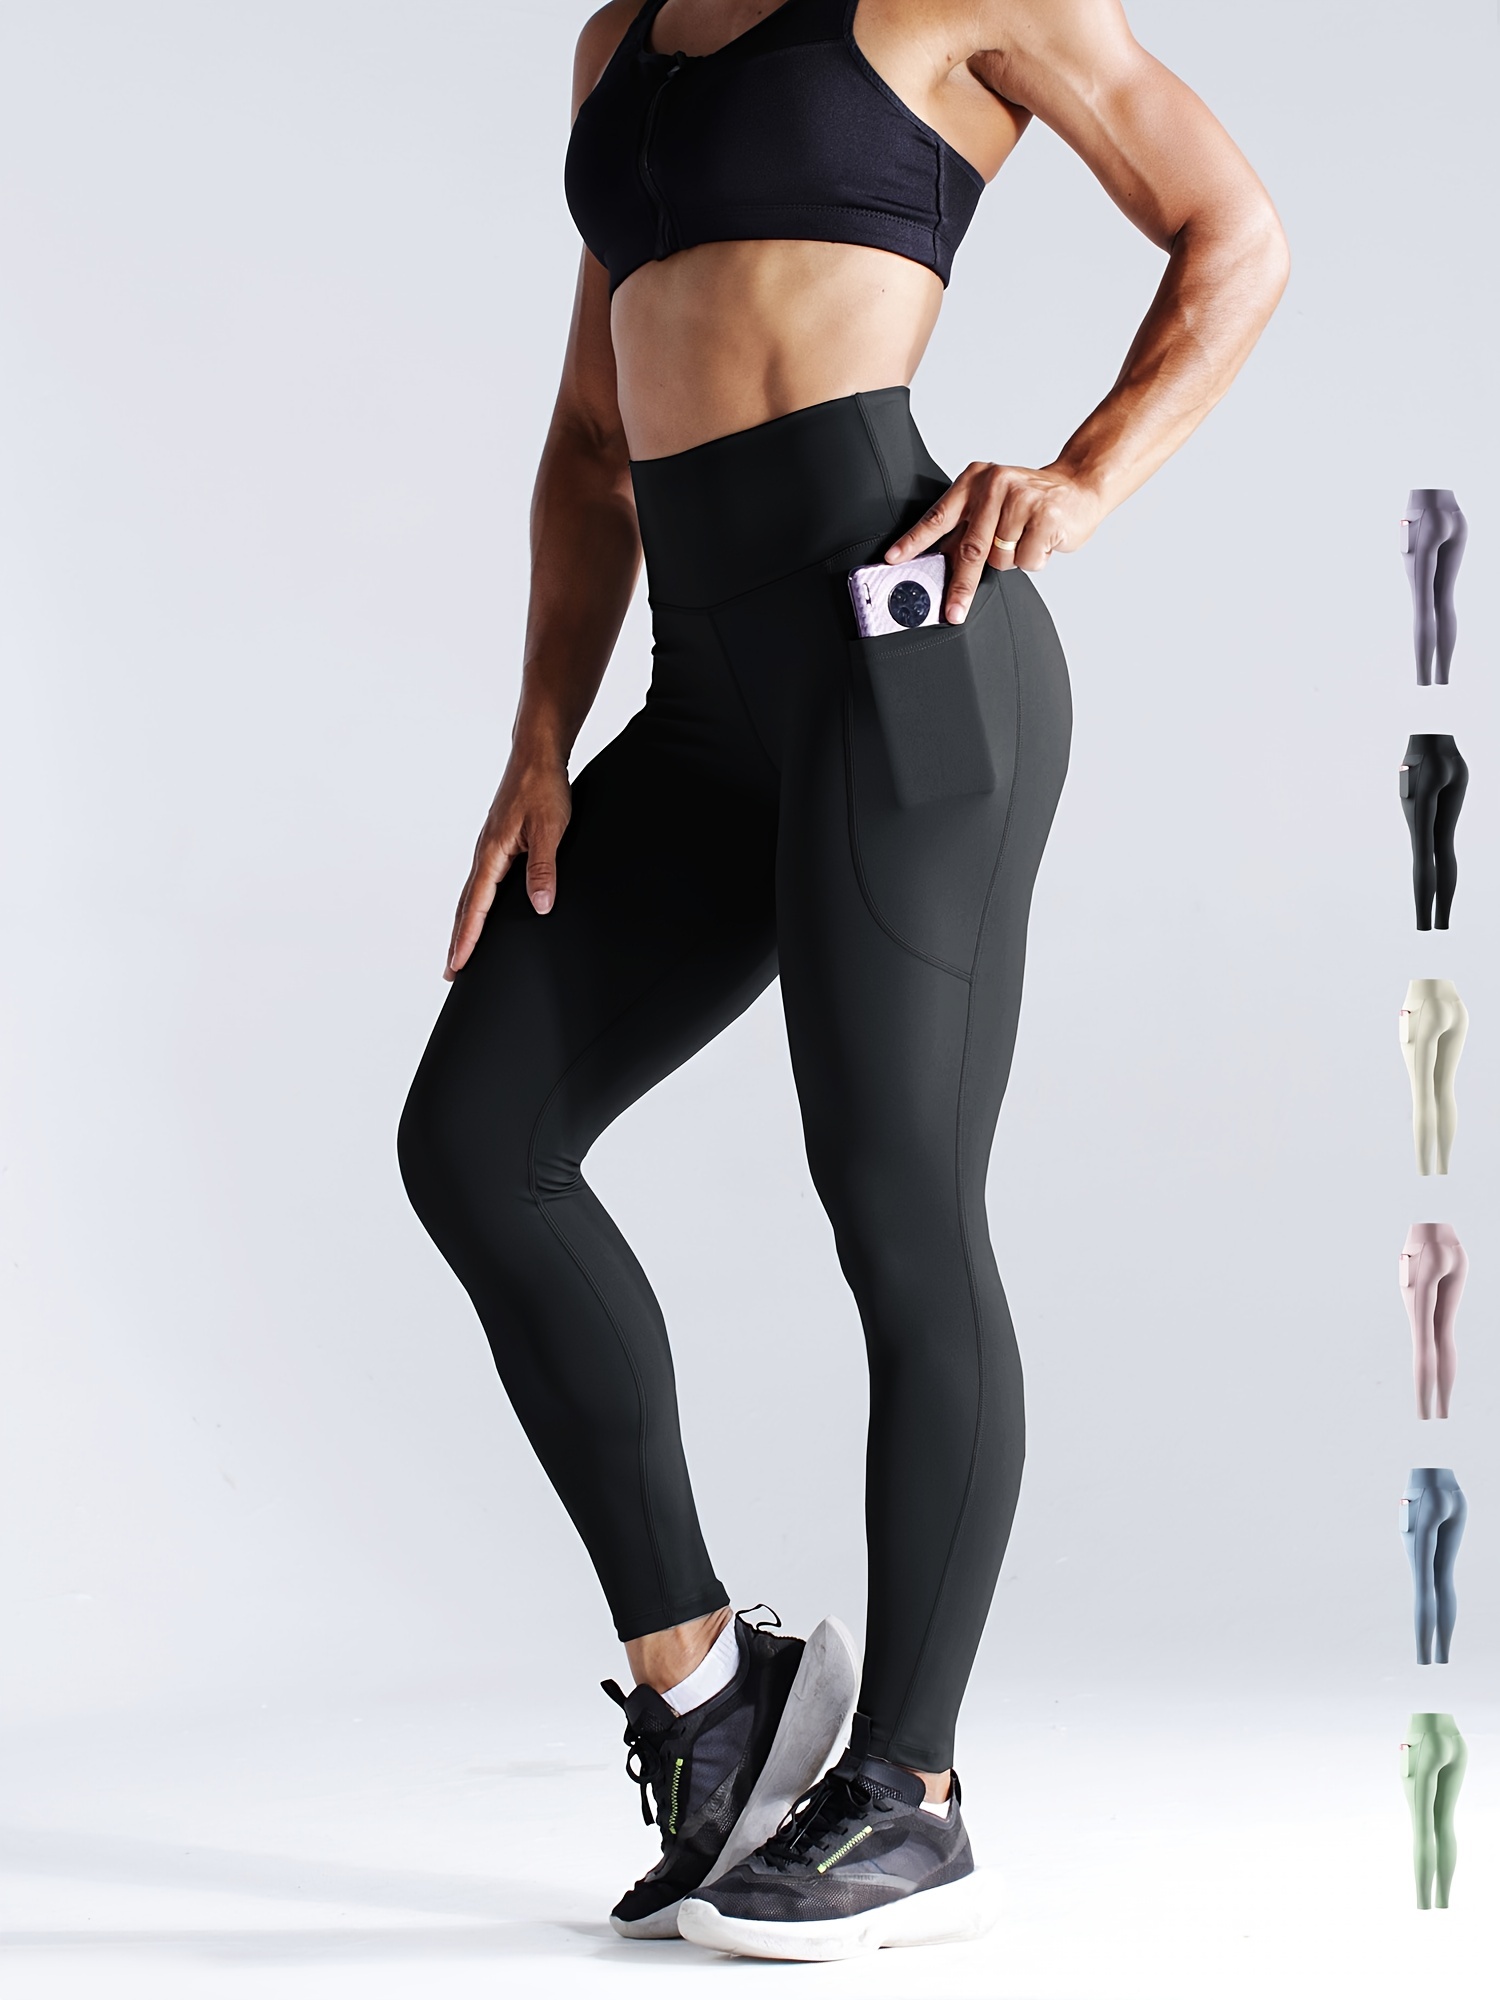 Black Women Yoga Shorts Pocket, Sports Gym Fitness Activewear